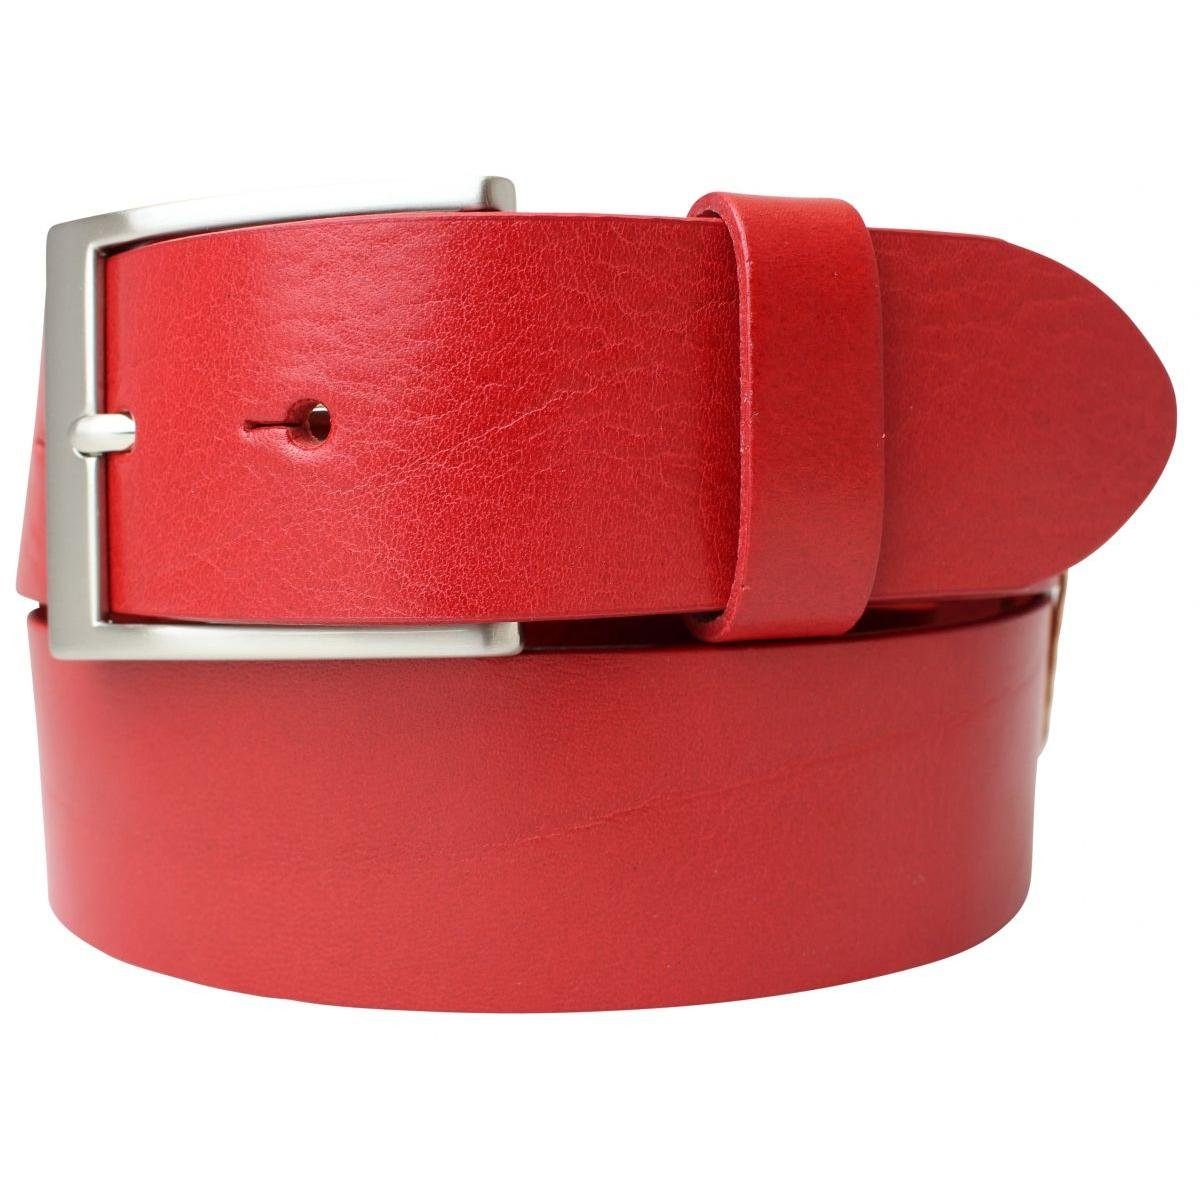 BELTINGER Ledergürtel Jeans-Gürtel aus Vollrindleder 4 cm - Hochwertiger Leder-Gürtel für He Rot, Silber